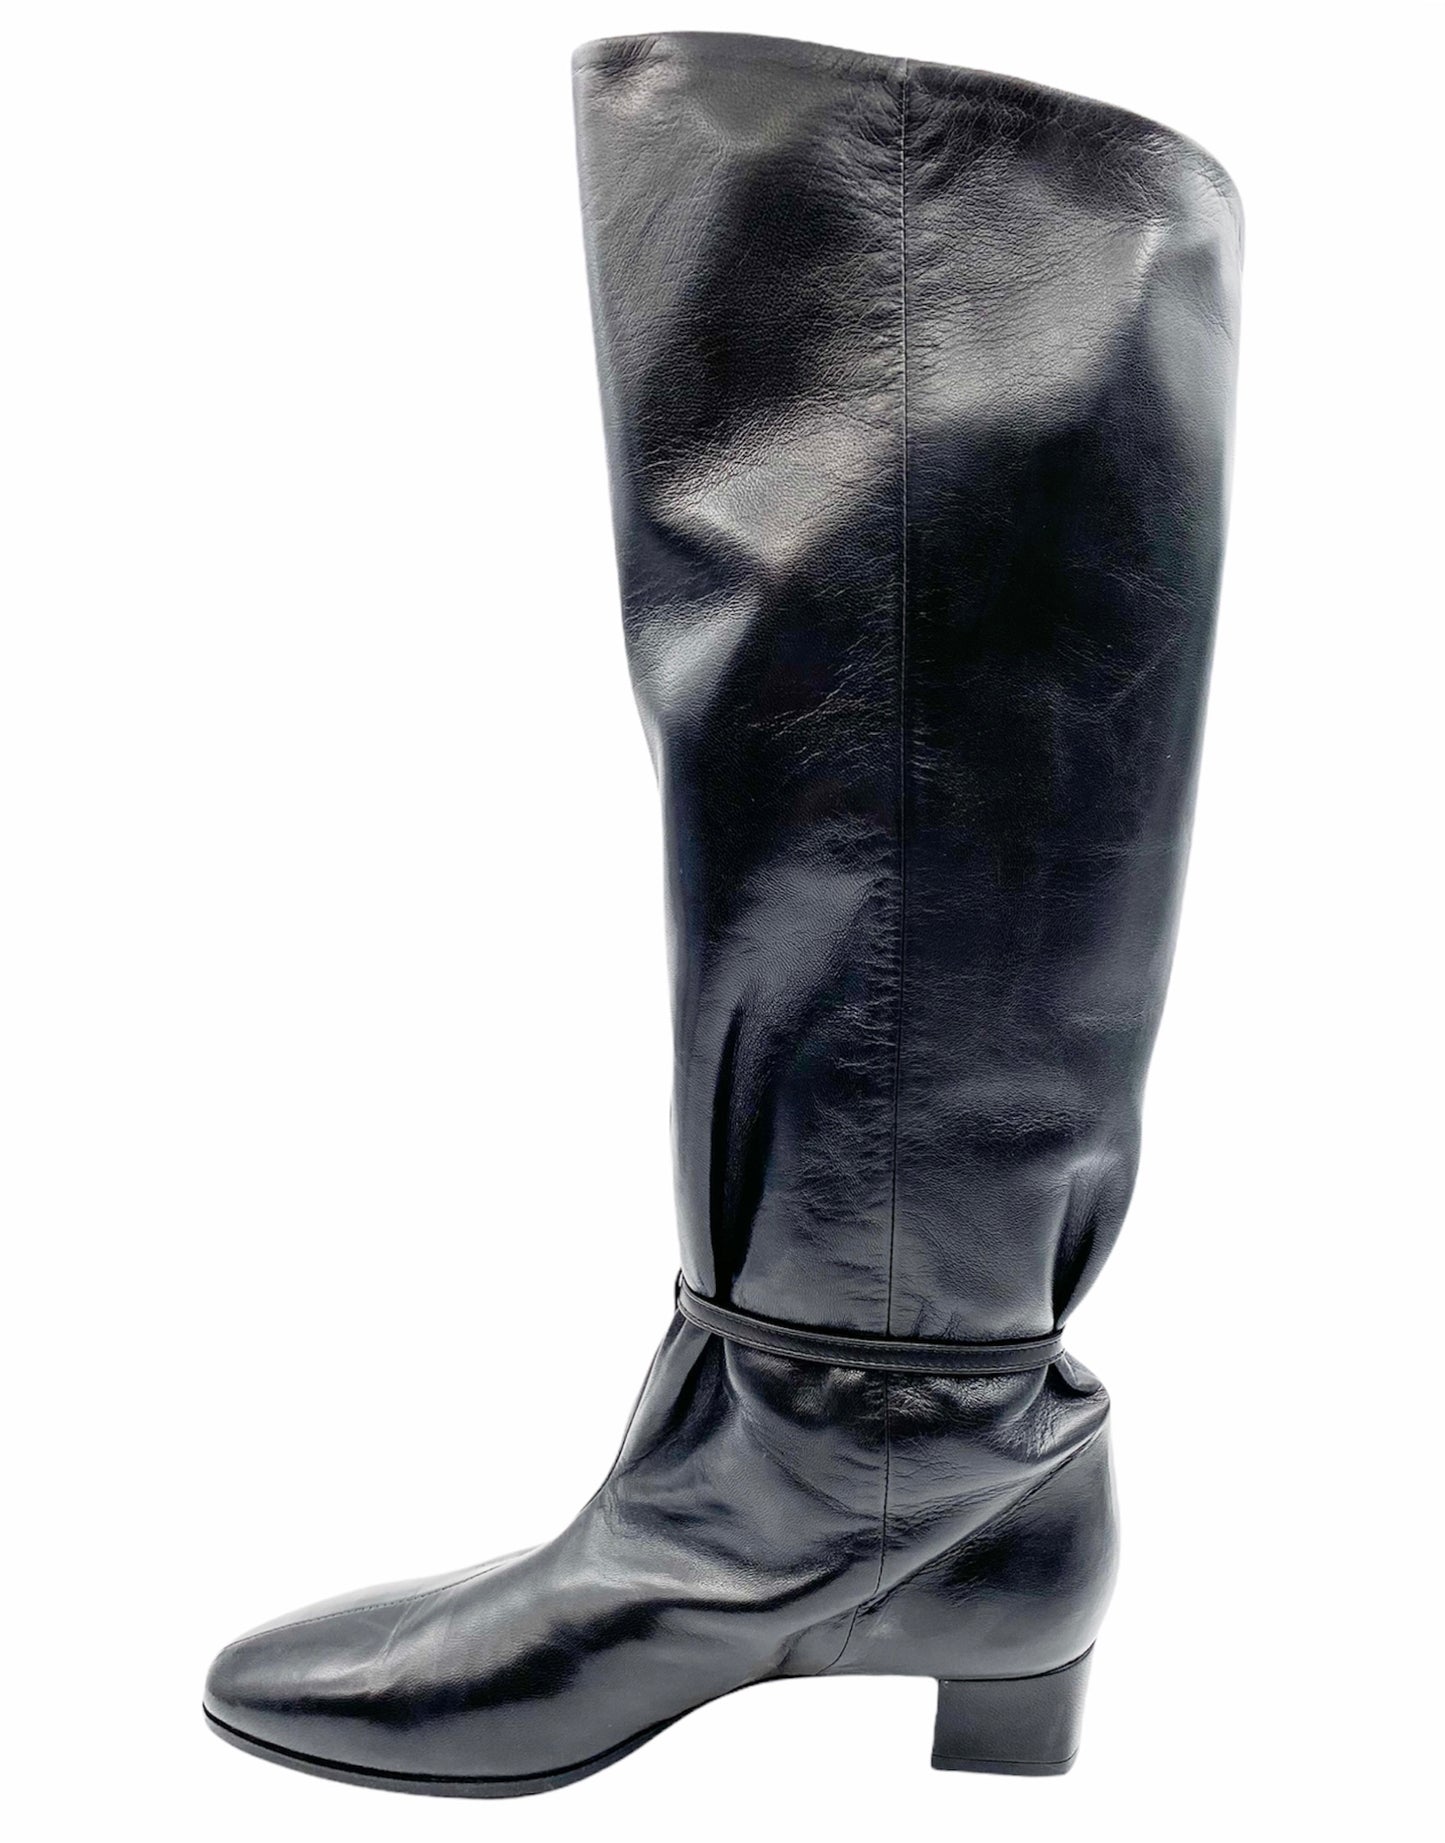 Lorena Paggi Black Glove Boot 12604